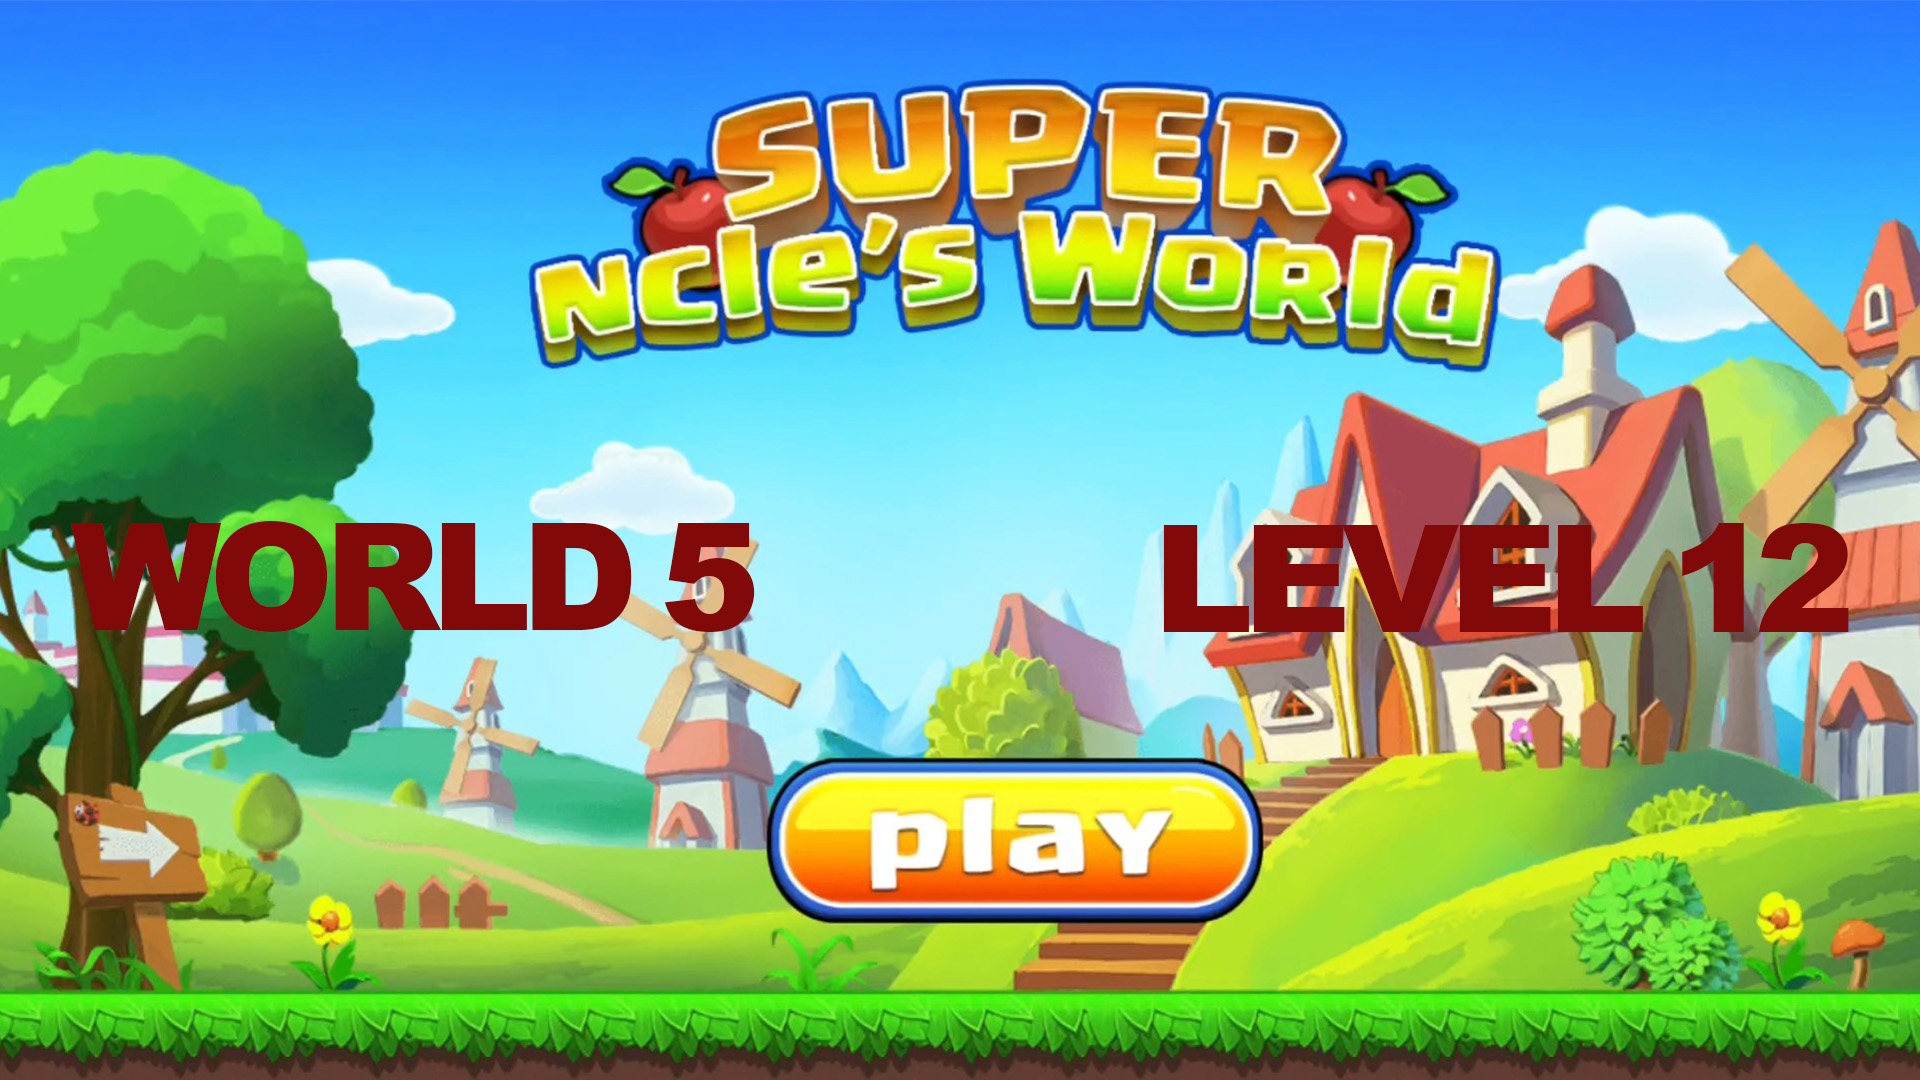 Super ncle's  World 5. Level 12.